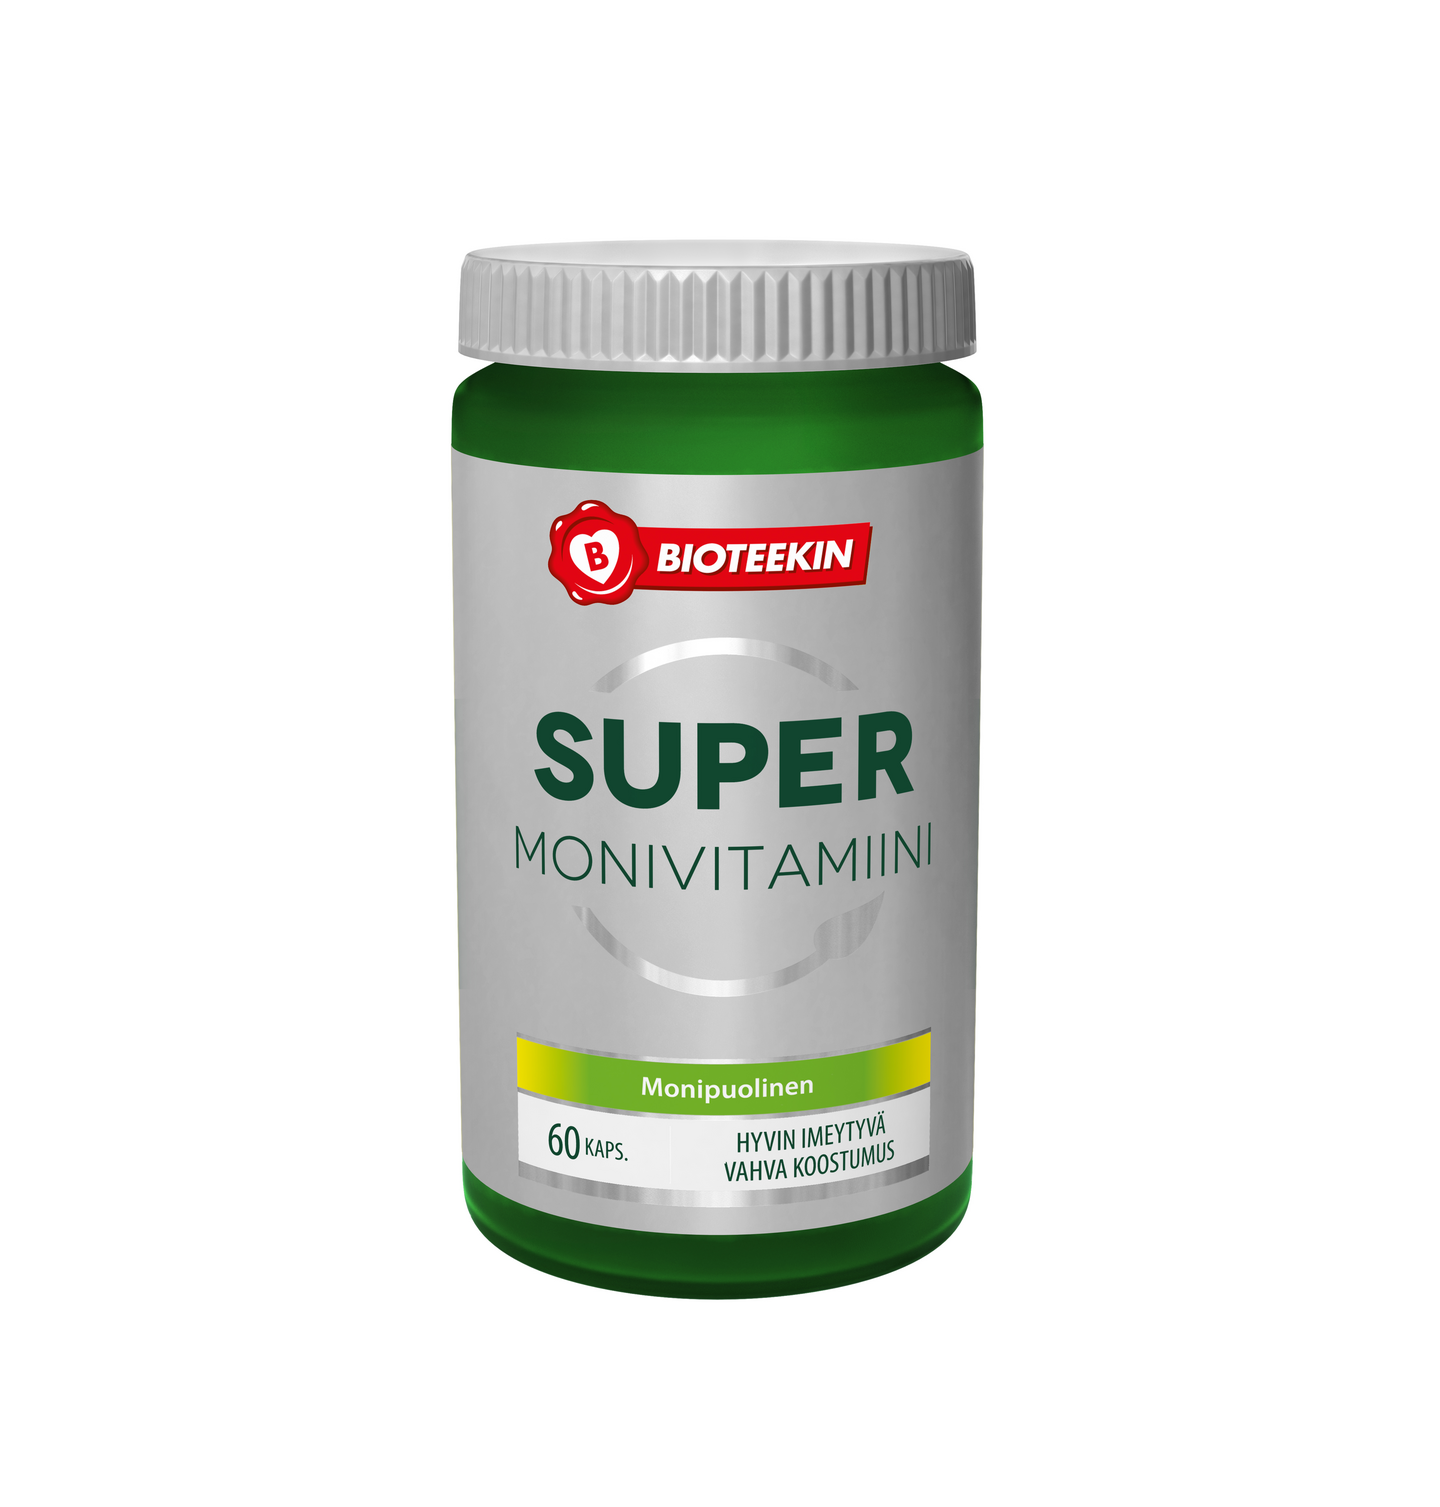 Bioteekin Super Monivitamiini 60kaps 48g | K-Ruoka Verkkokauppa